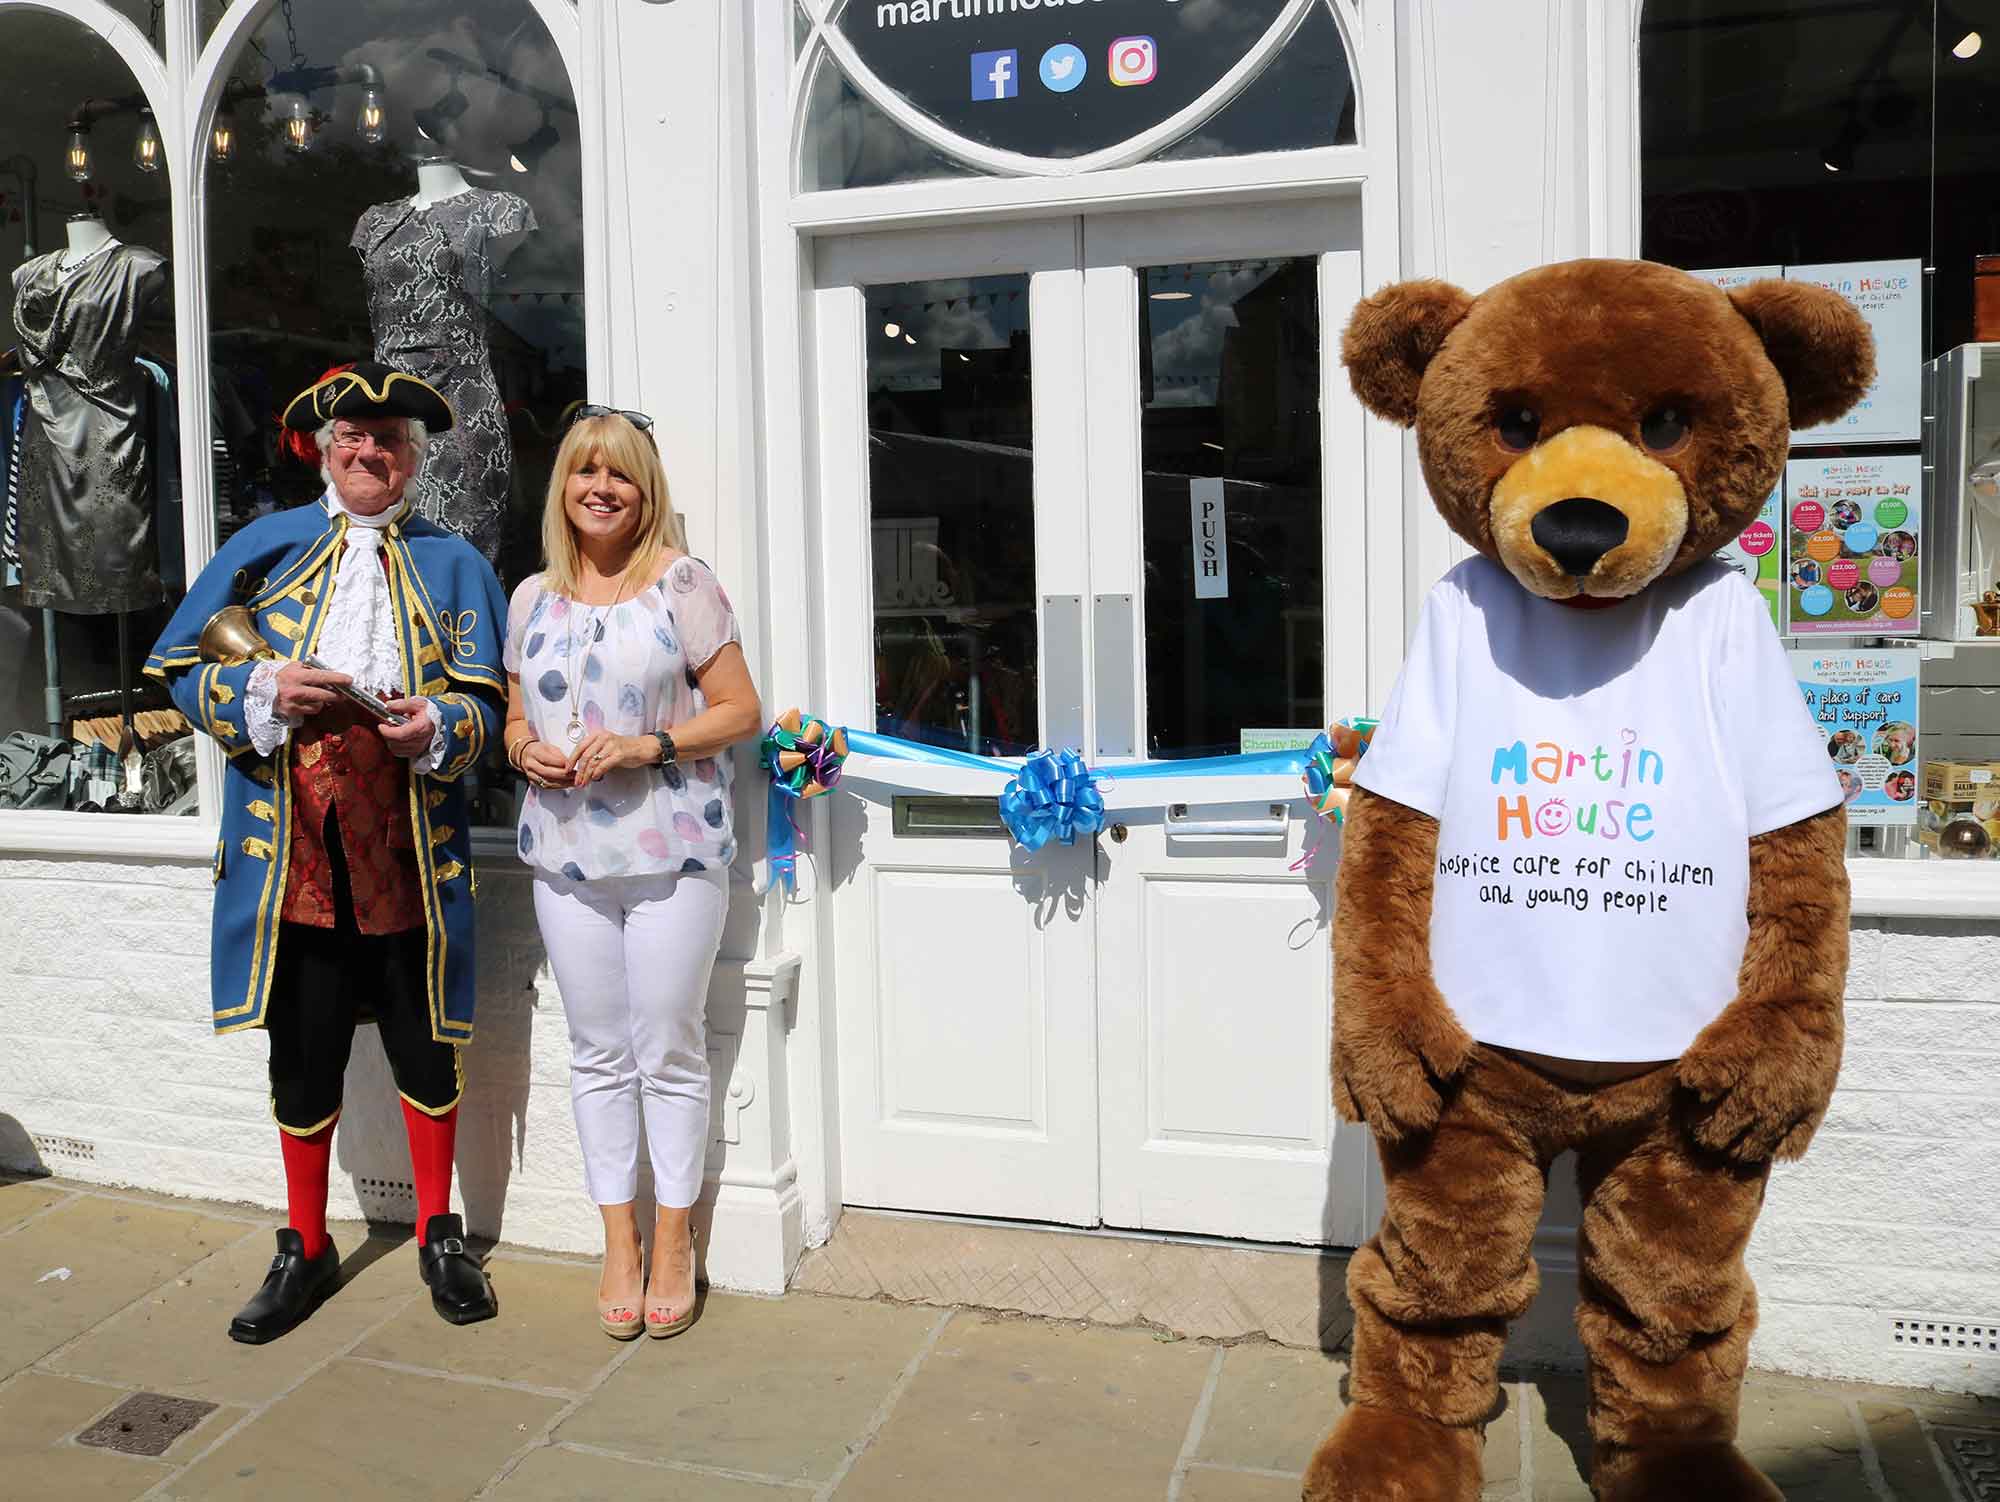 ITV Calendar presenter Christine Talbot, and Knaresborough Town Crier Roger Hewitt open the Martin House Knaresborough shop last July, with the help of Marty Bear